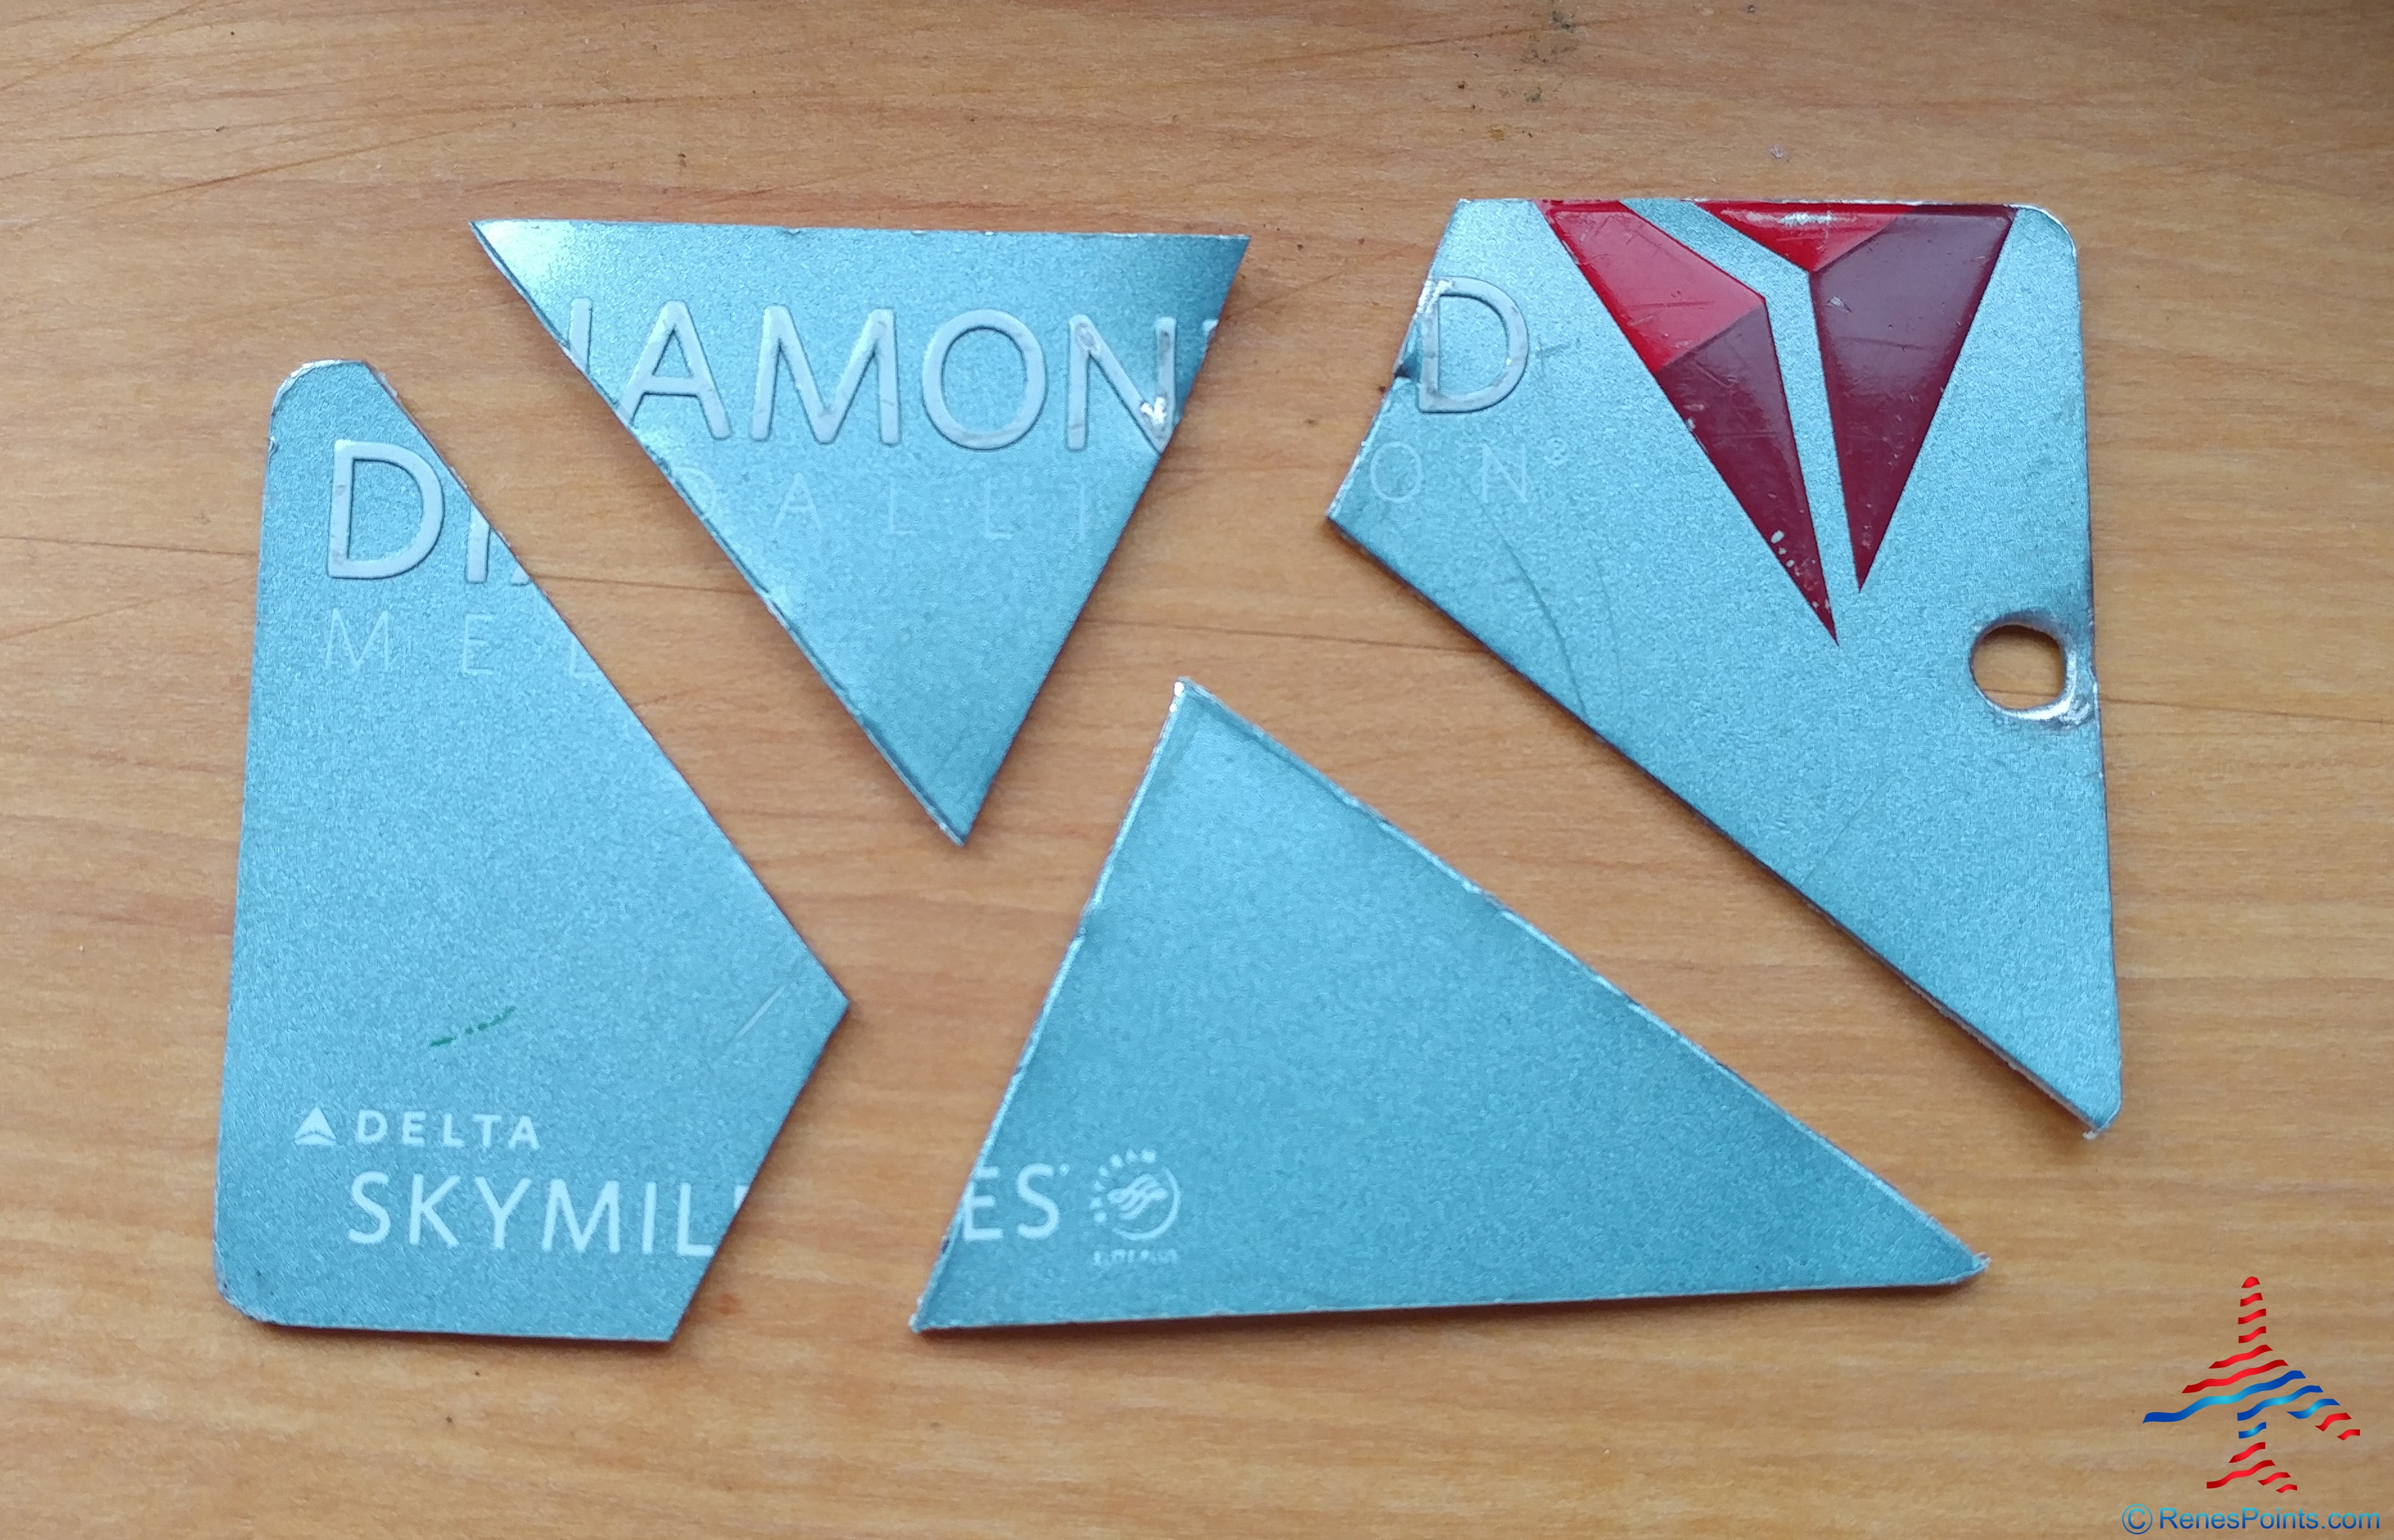 Delta Diamond Medallion card cut up